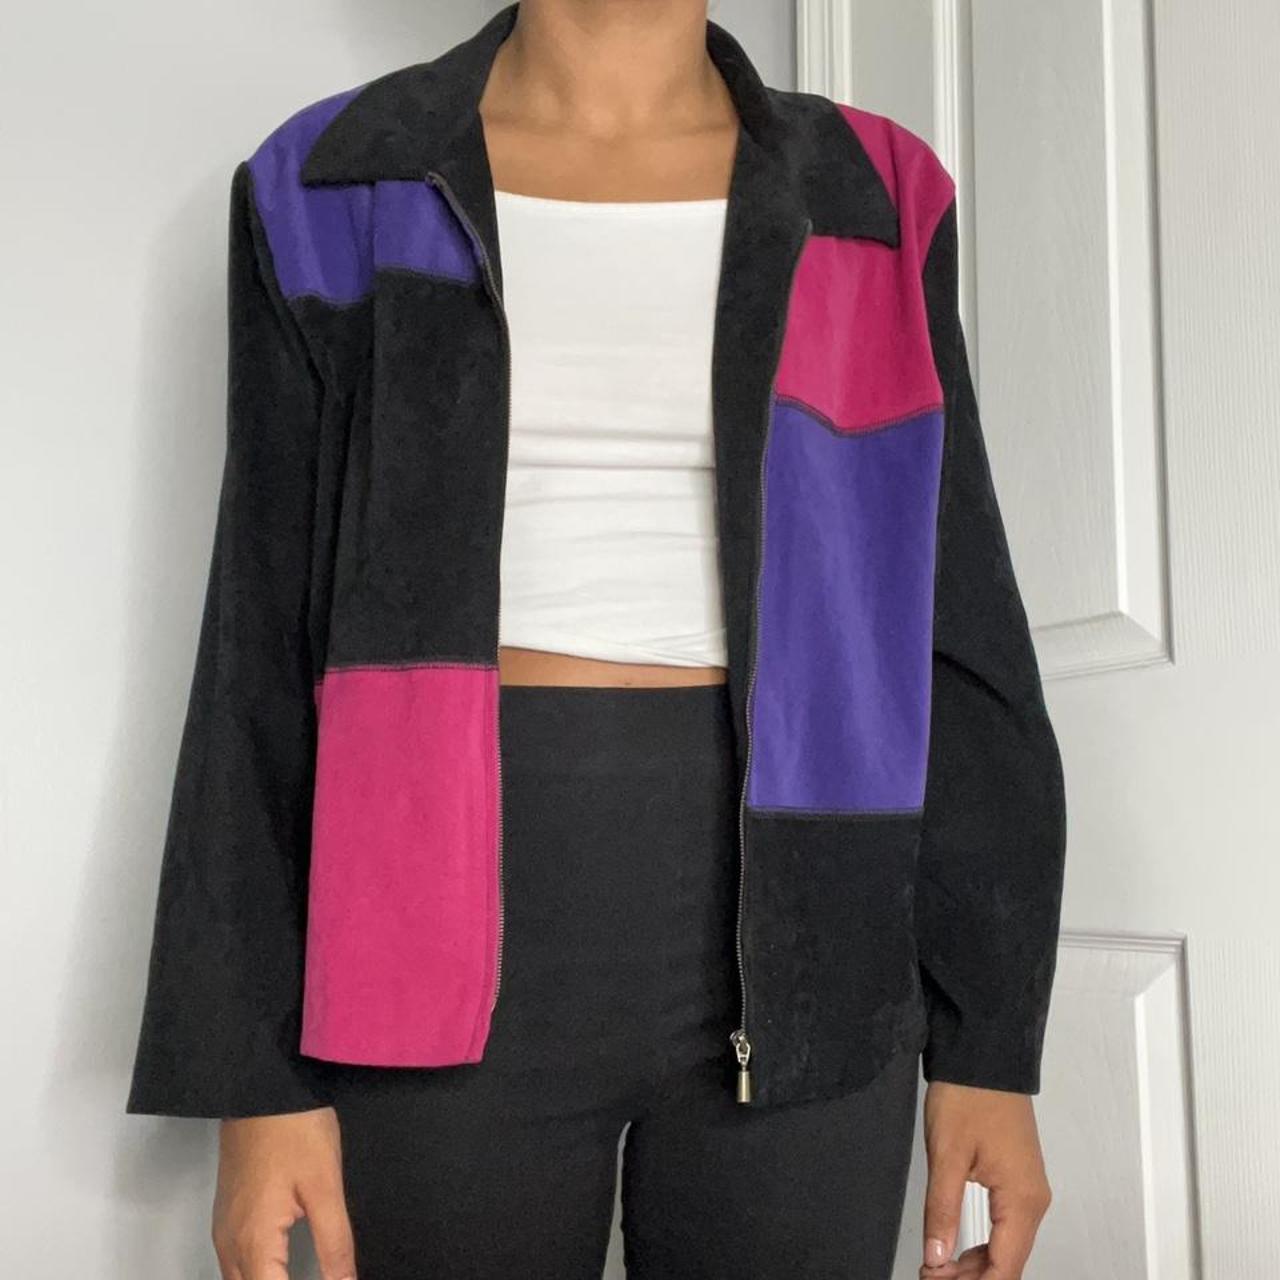 Product Image 1 - Color block zip up jacket